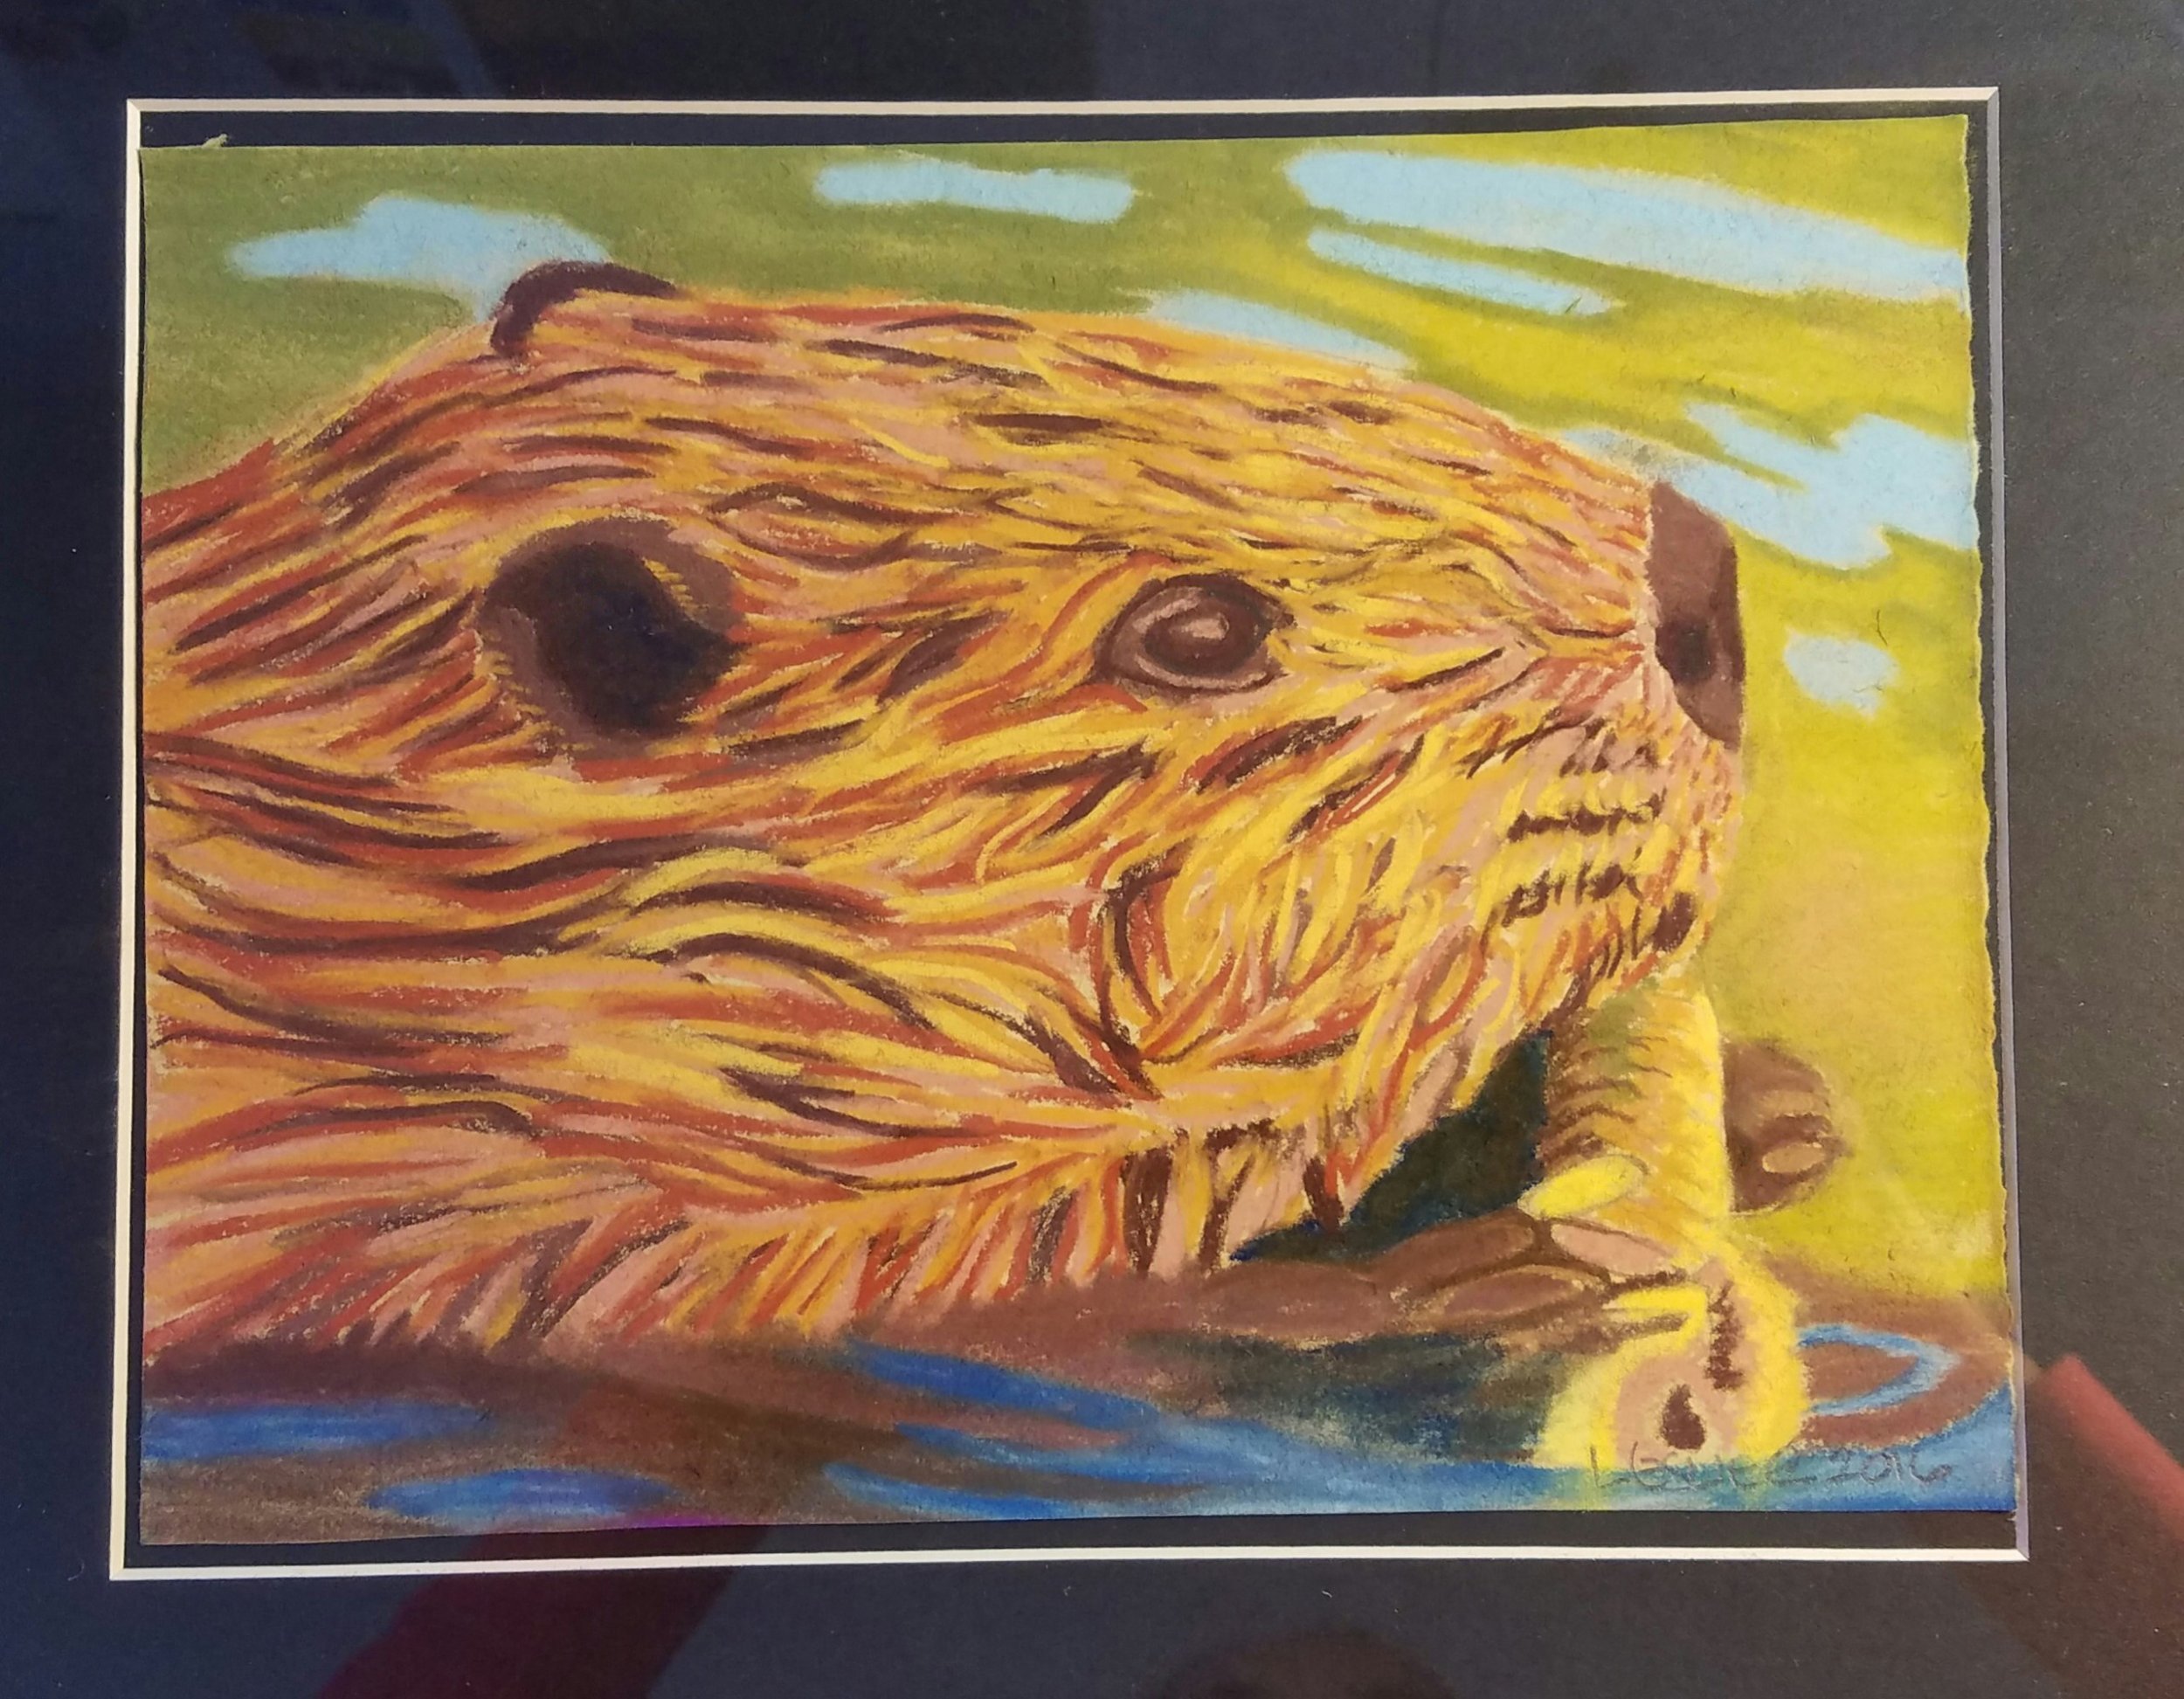   Leslie Aguilar 2016. Beaver Eating a Twig. Pastels on paper 8x10  